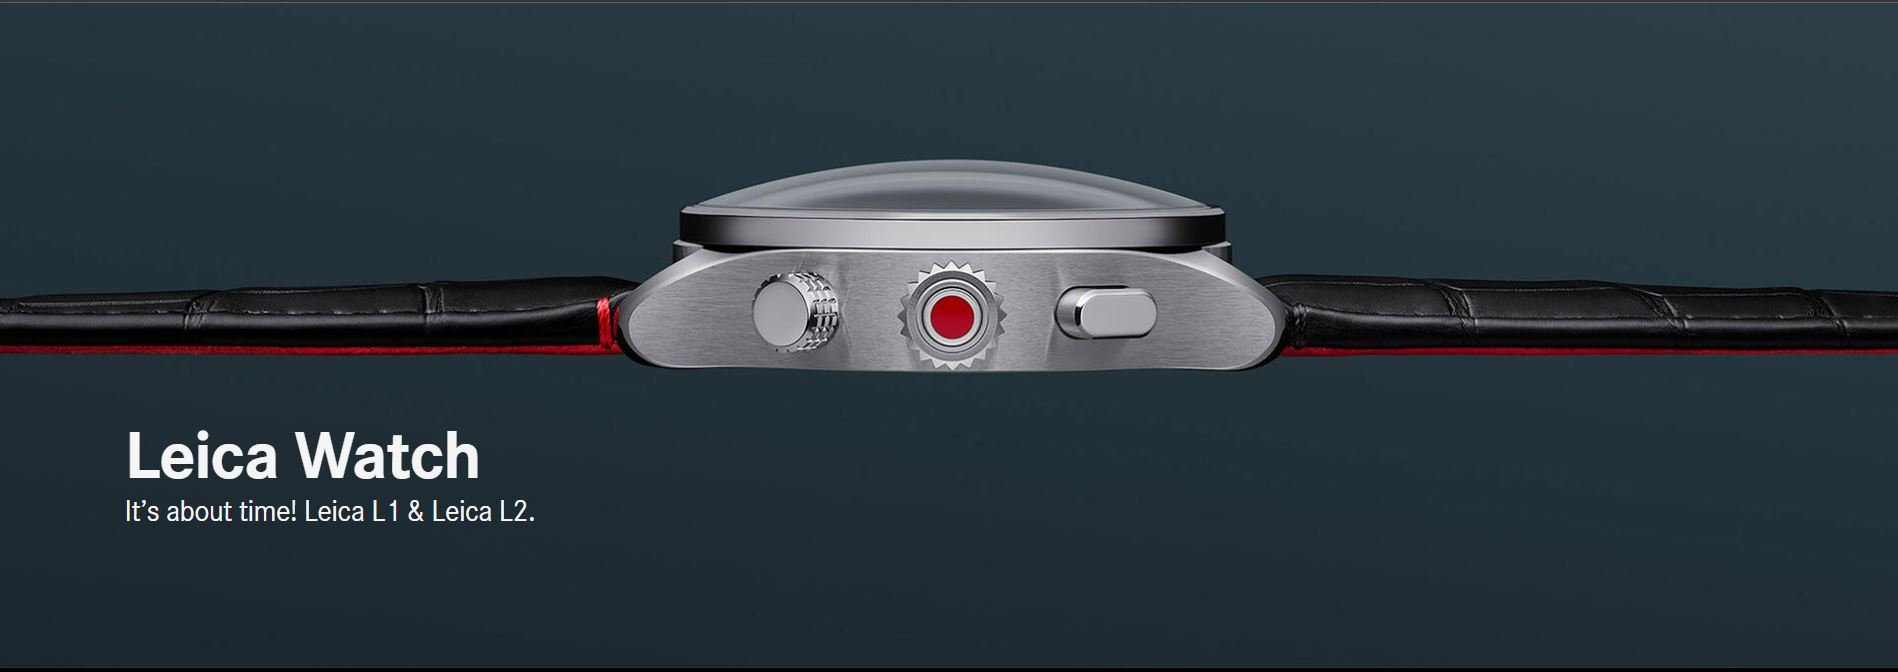 Leica-Watch-Announcement